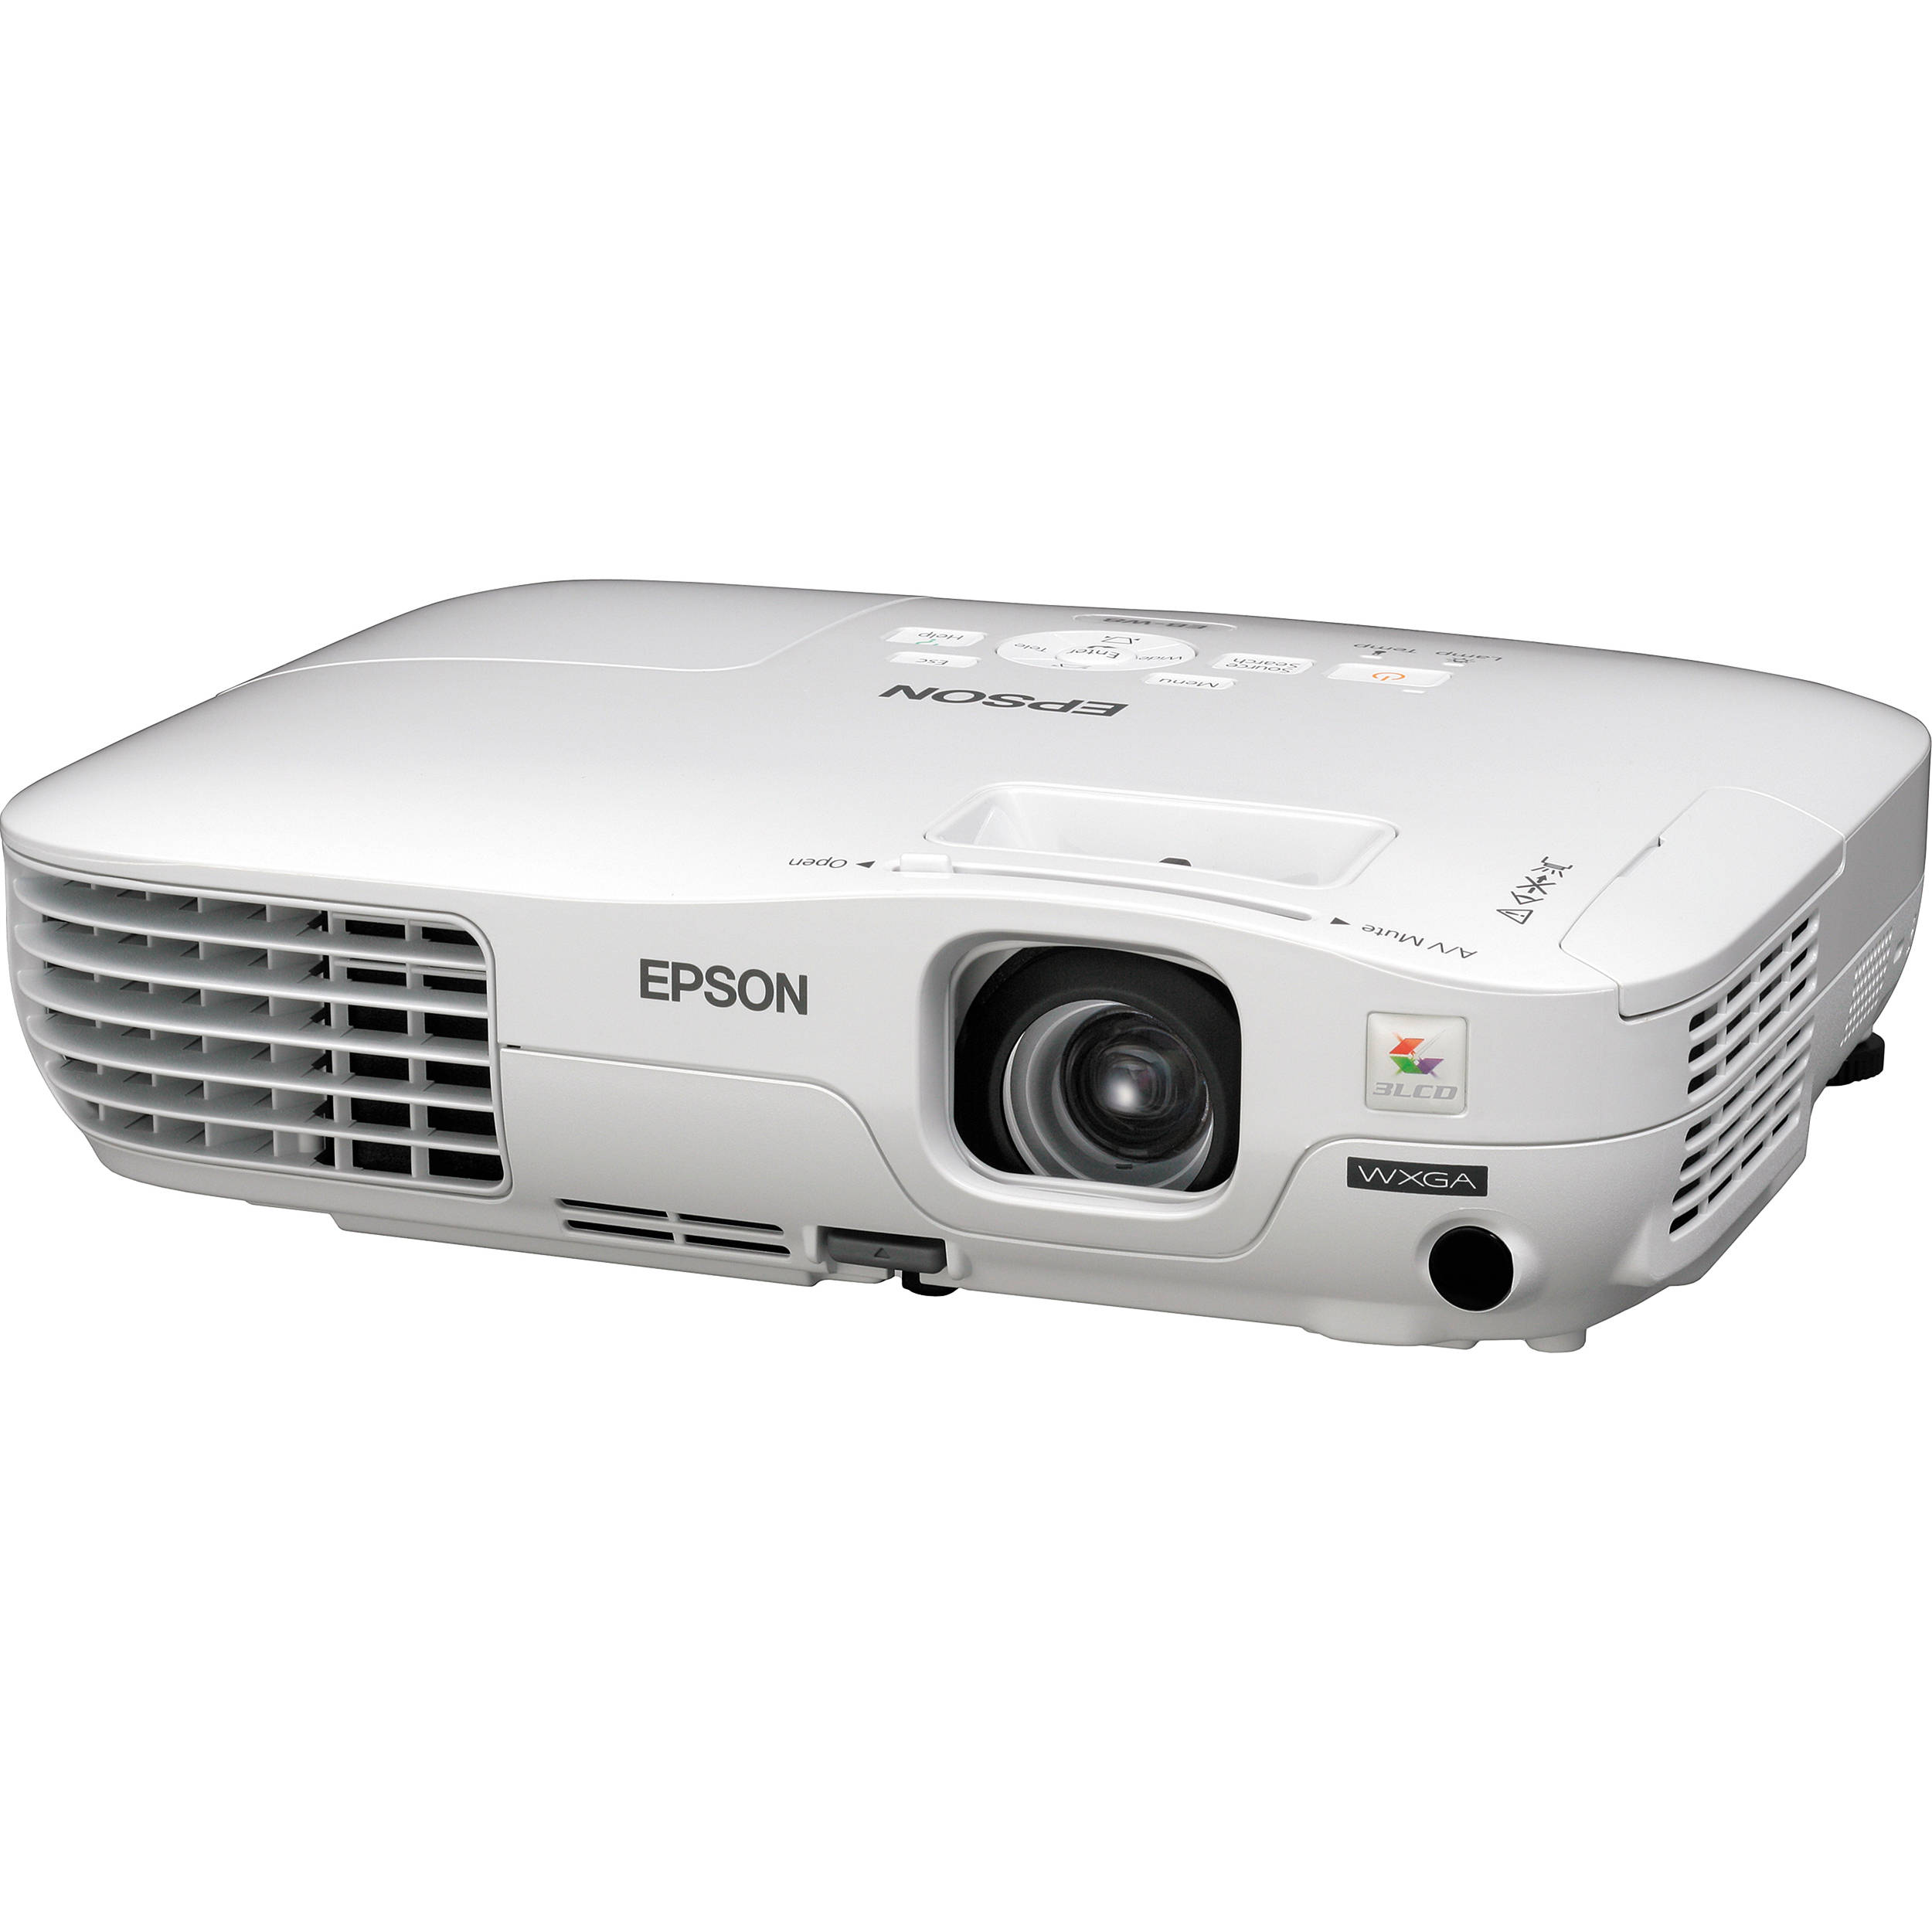 Epson EX31 Multimedia Projector V11H309020-B B&H Photo Video